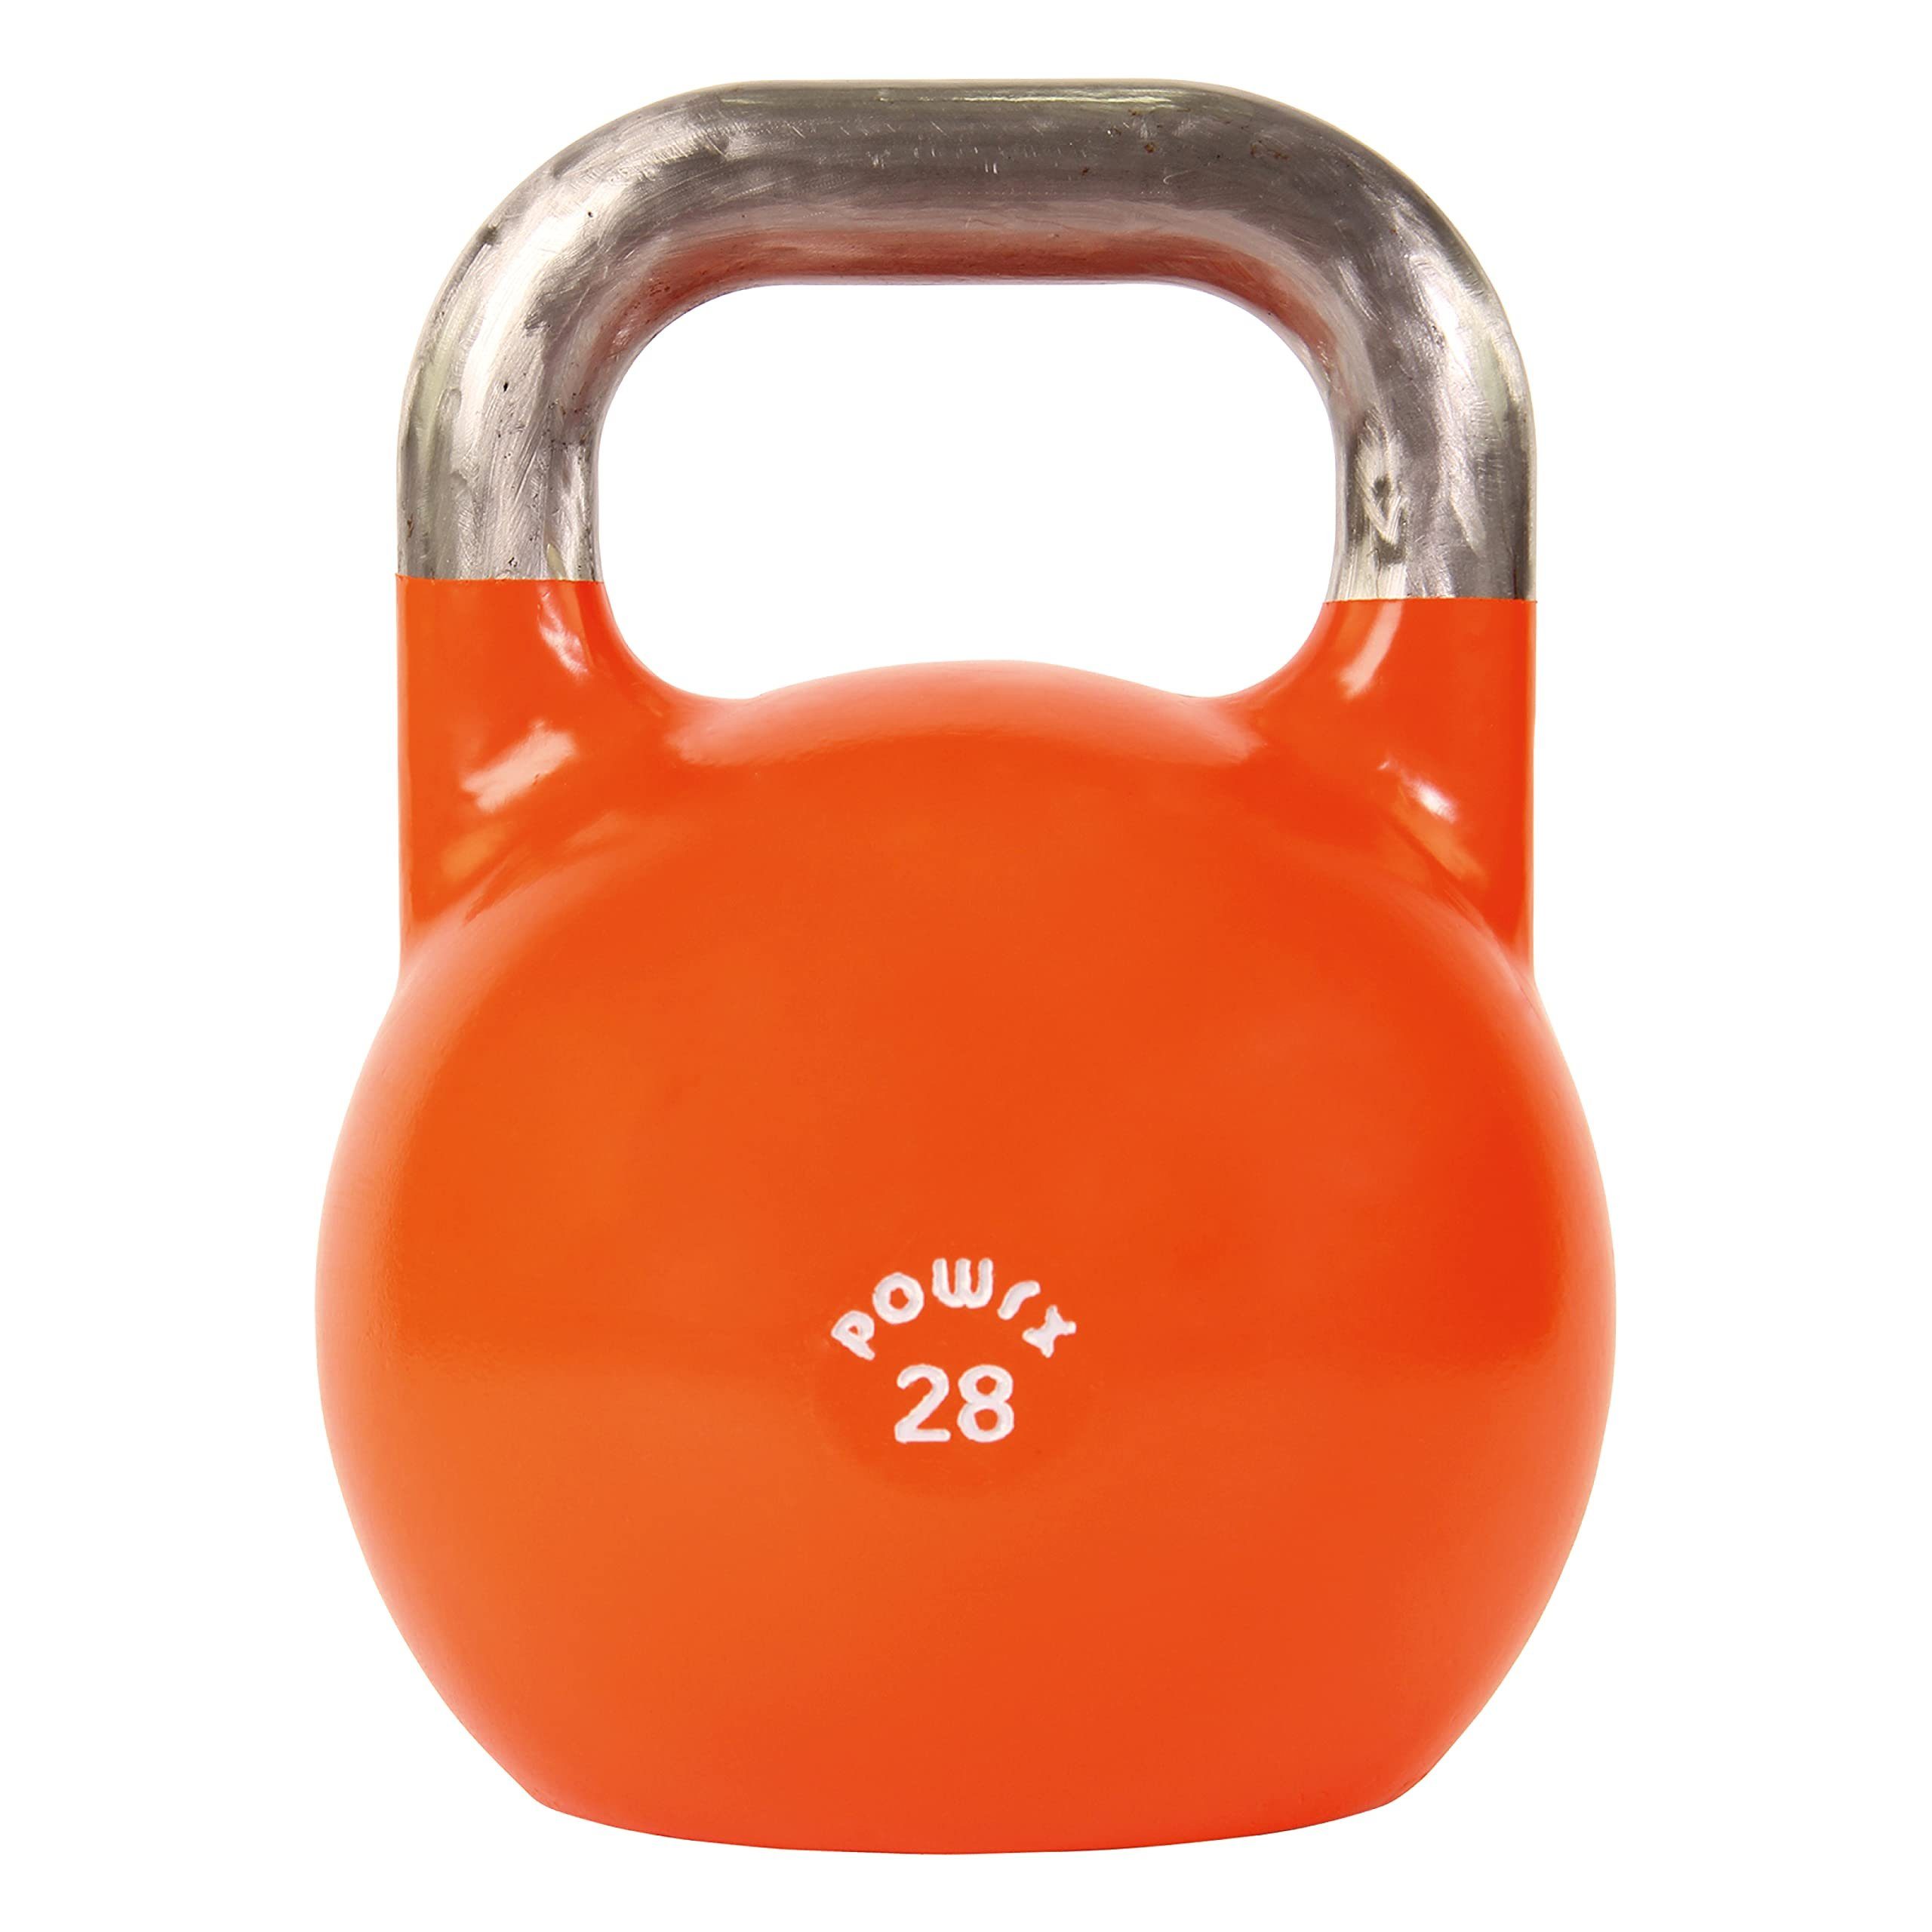 28 Orange Orange kg Kg Kettlebell Wettkampf kg), Kugelhantel (1x POWRX 4-48 28 1X